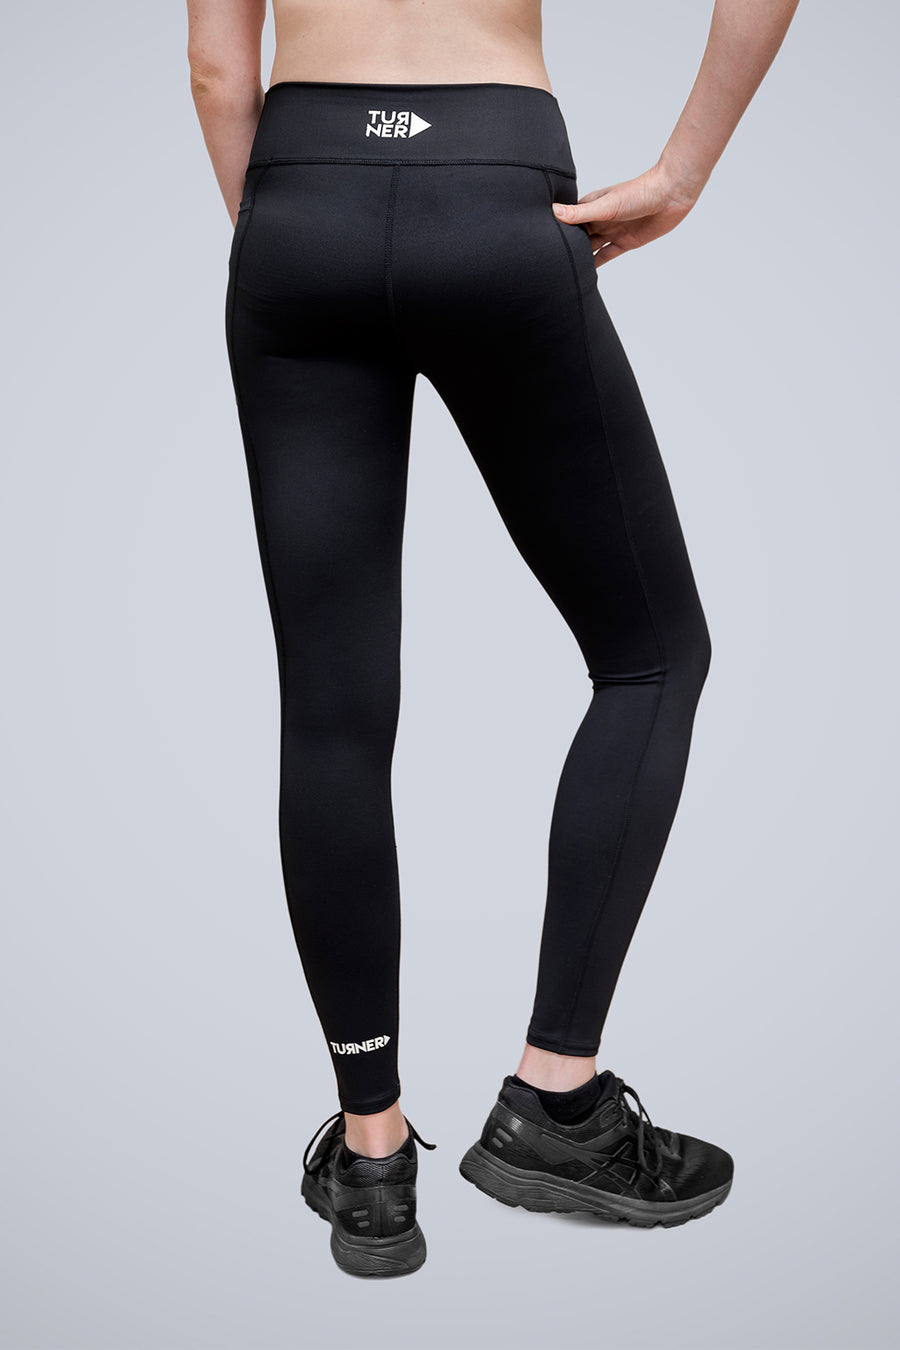 Turner Activewear  Women's Function One Black Full Length